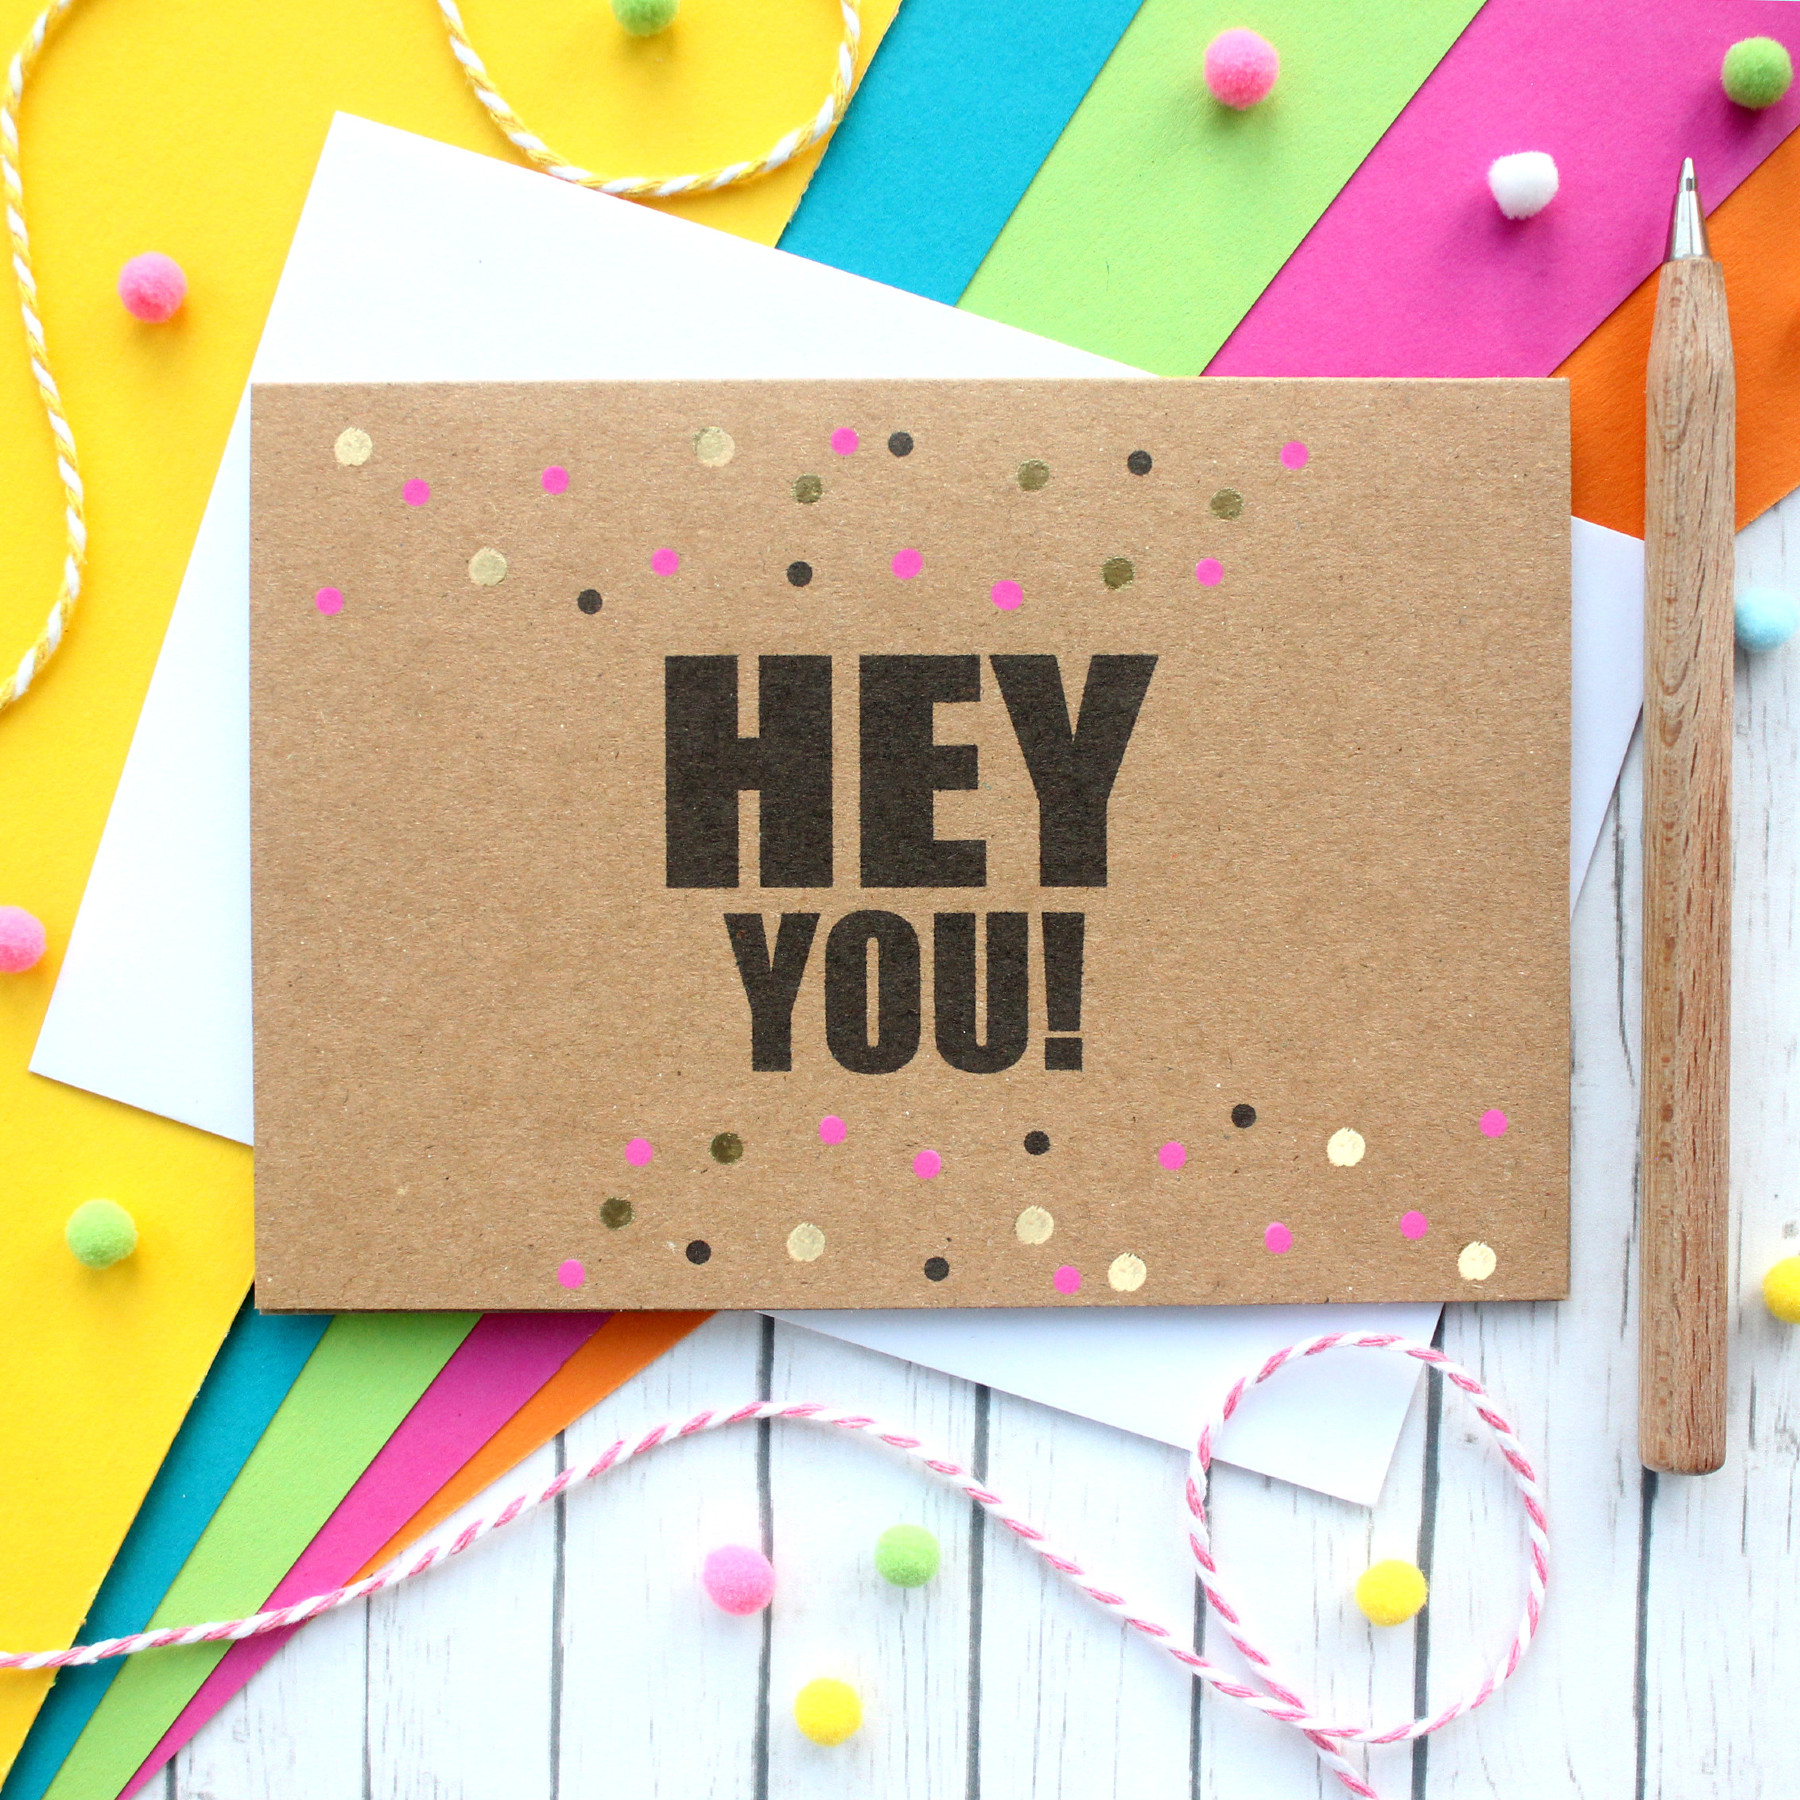 Hey You - Hello Card